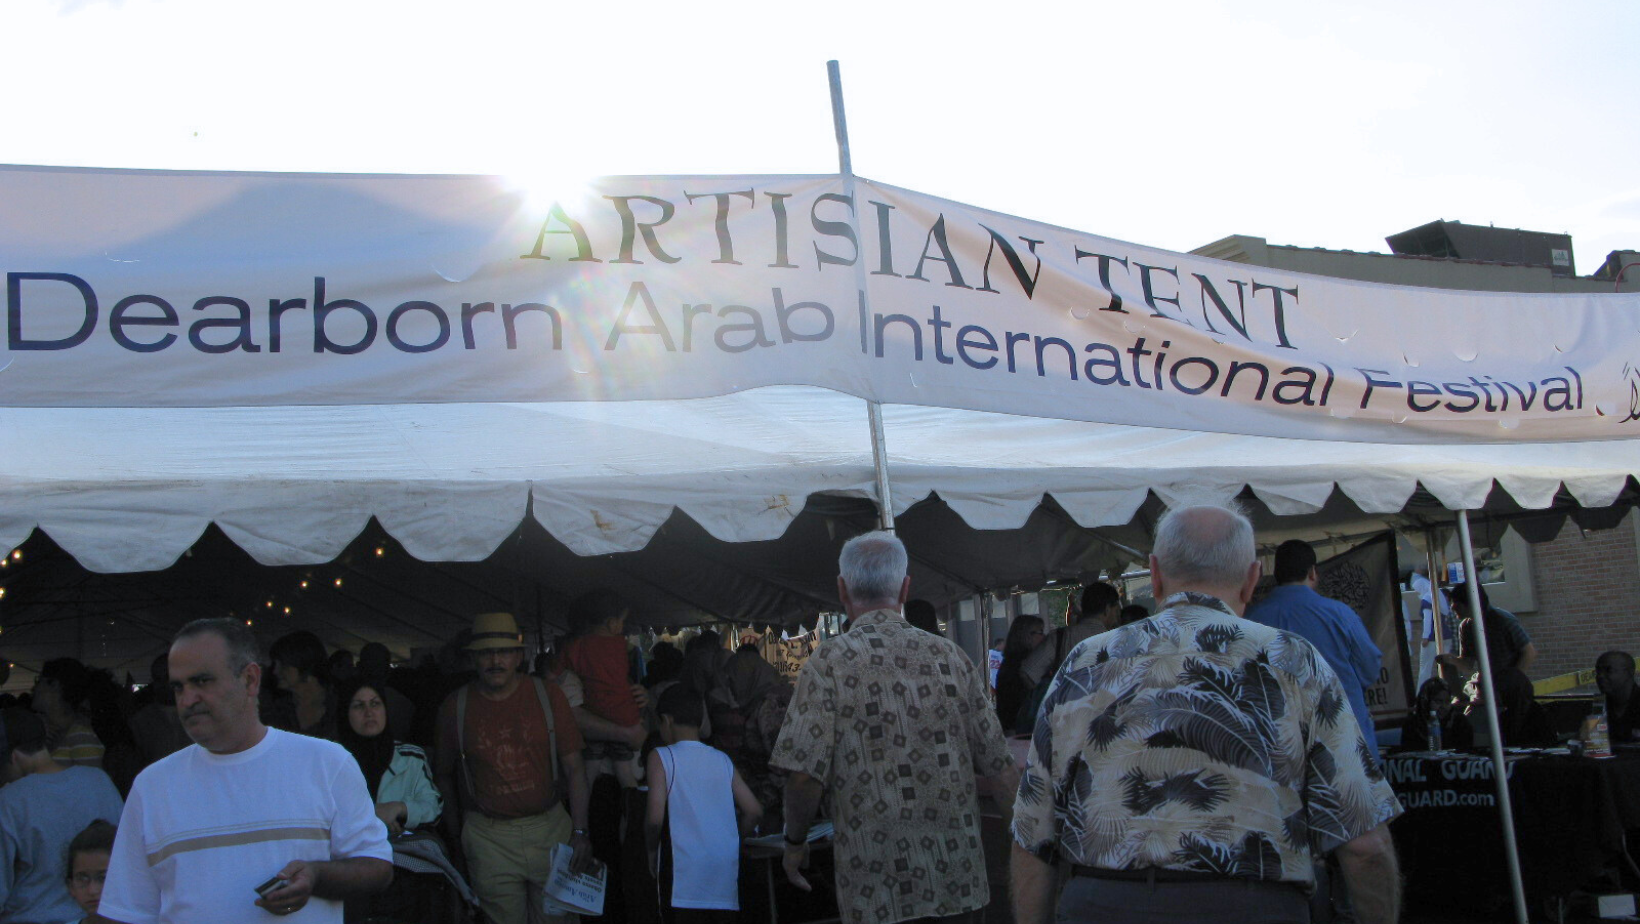 Dearborn Islamic festival tent